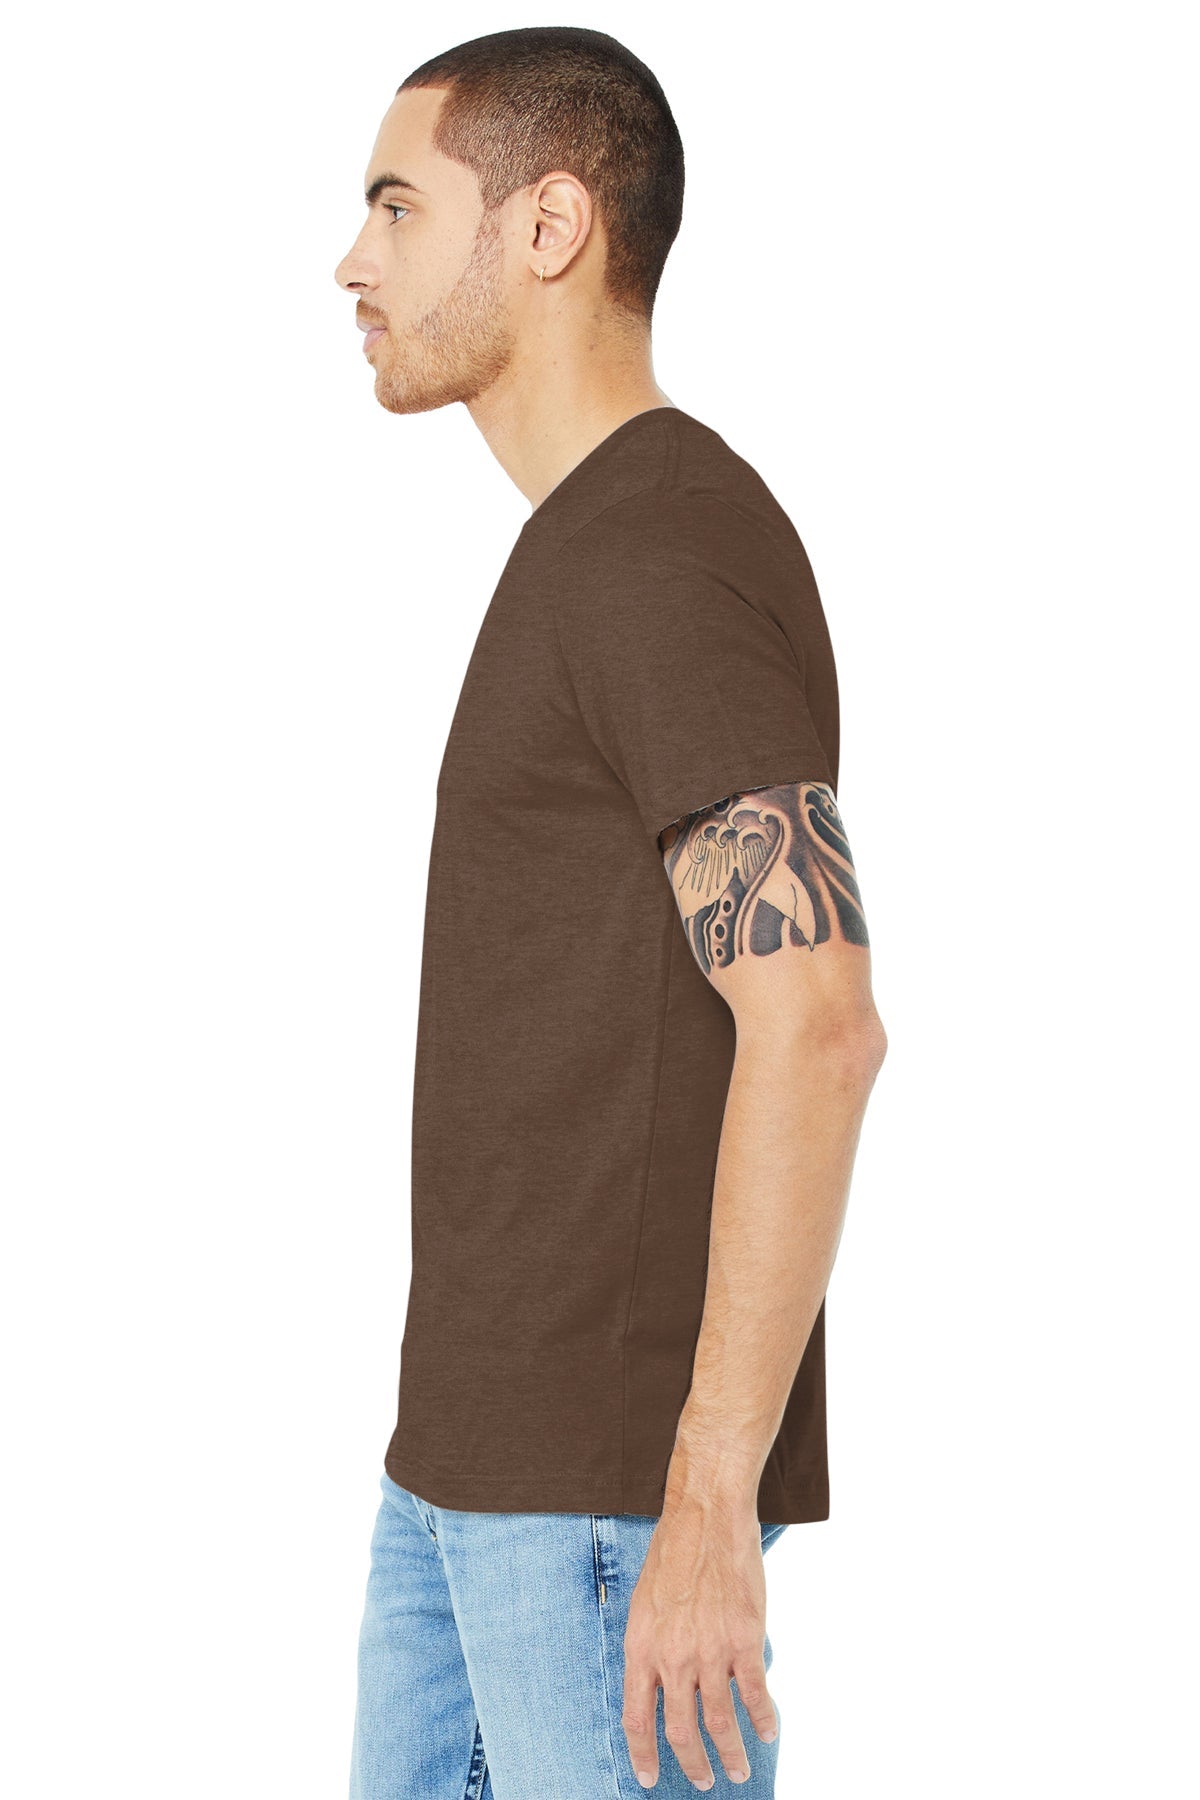 bella + canvas unisex jersey short sleeve t-shirt 3001c heather brown